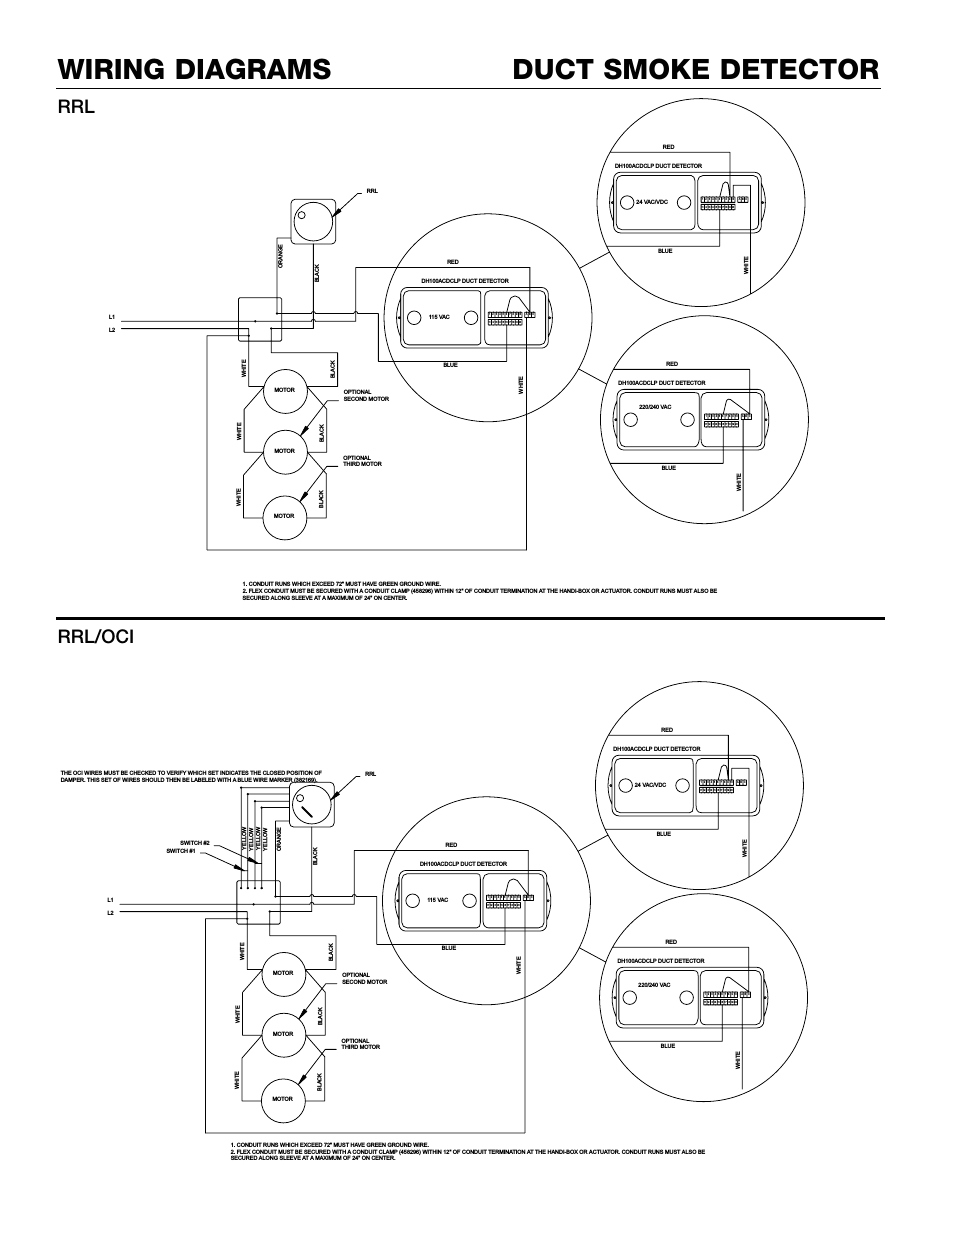 duct smoke detector wiring diagrams rrl rrl oci greenheck fan mix duct smoke detector wiring